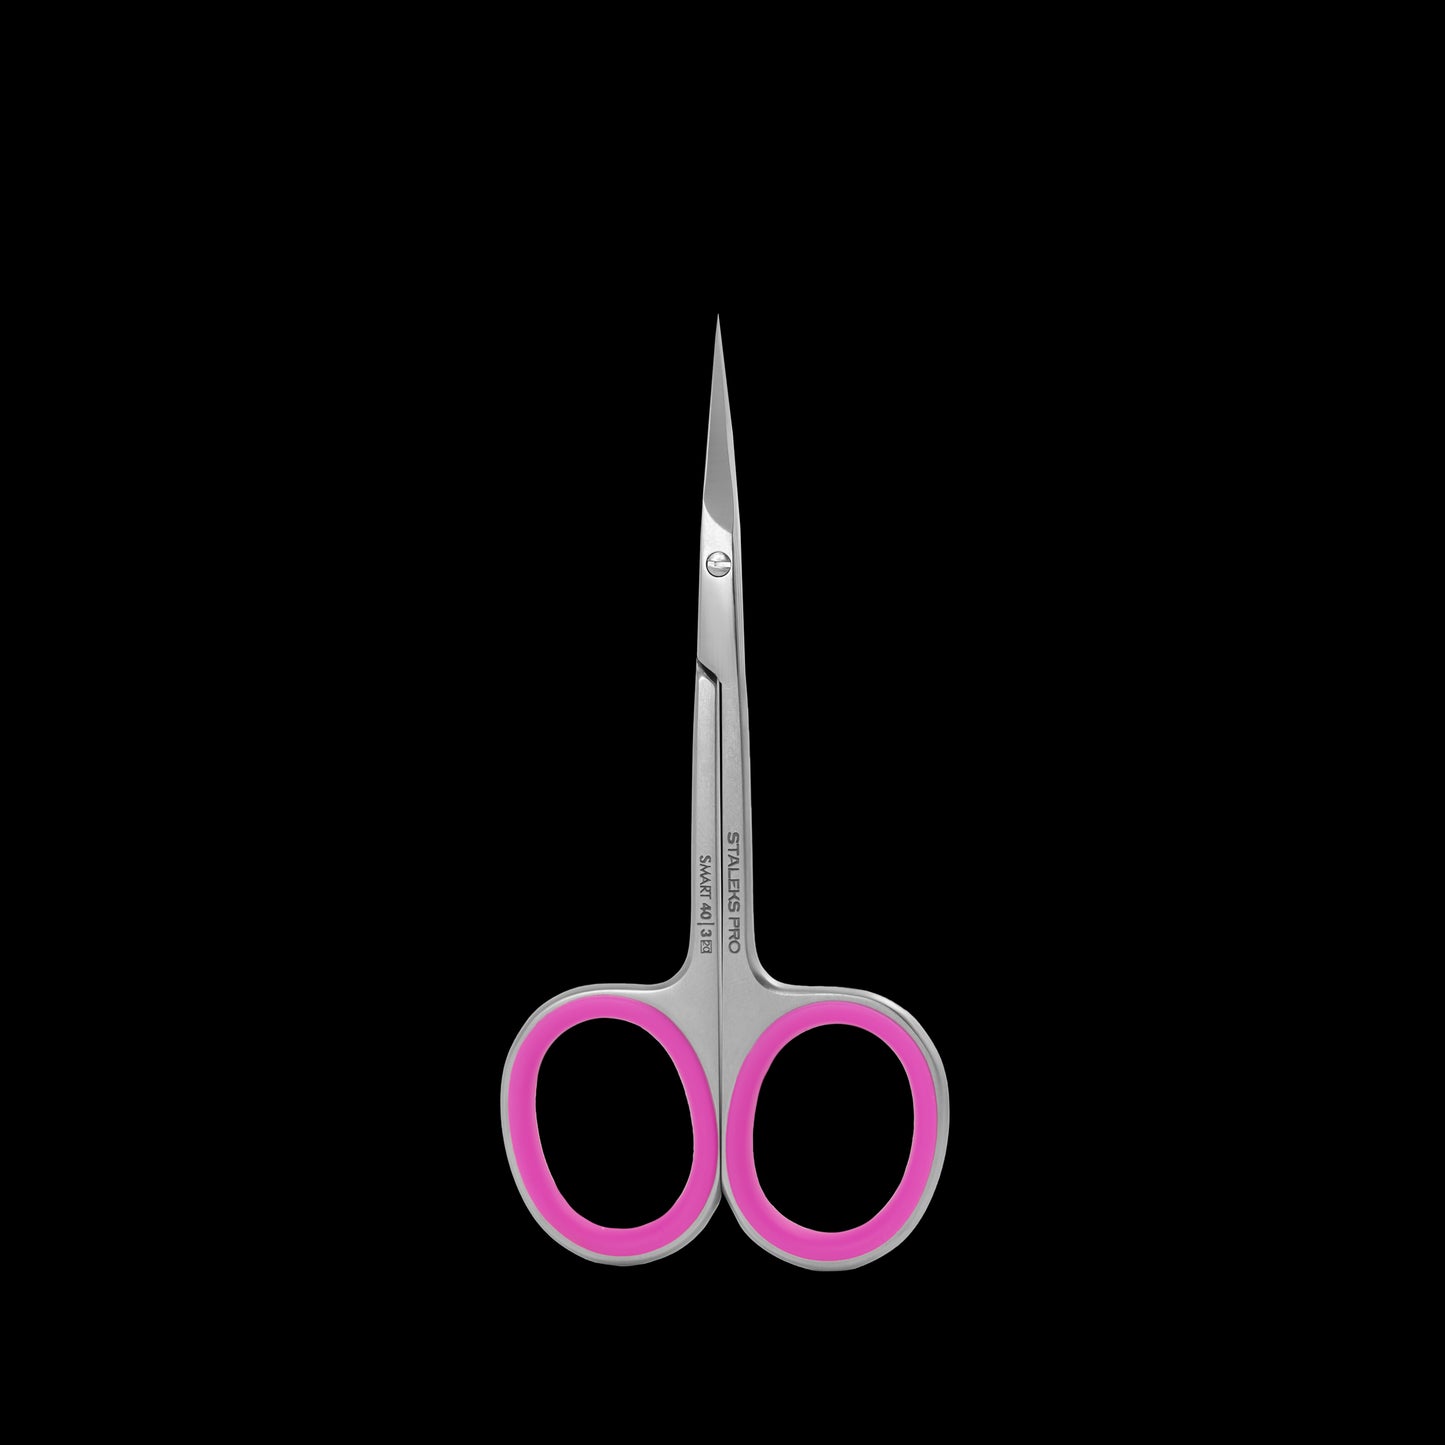 Staleks Professional cuticle scissors SMART 40 TYPE 3